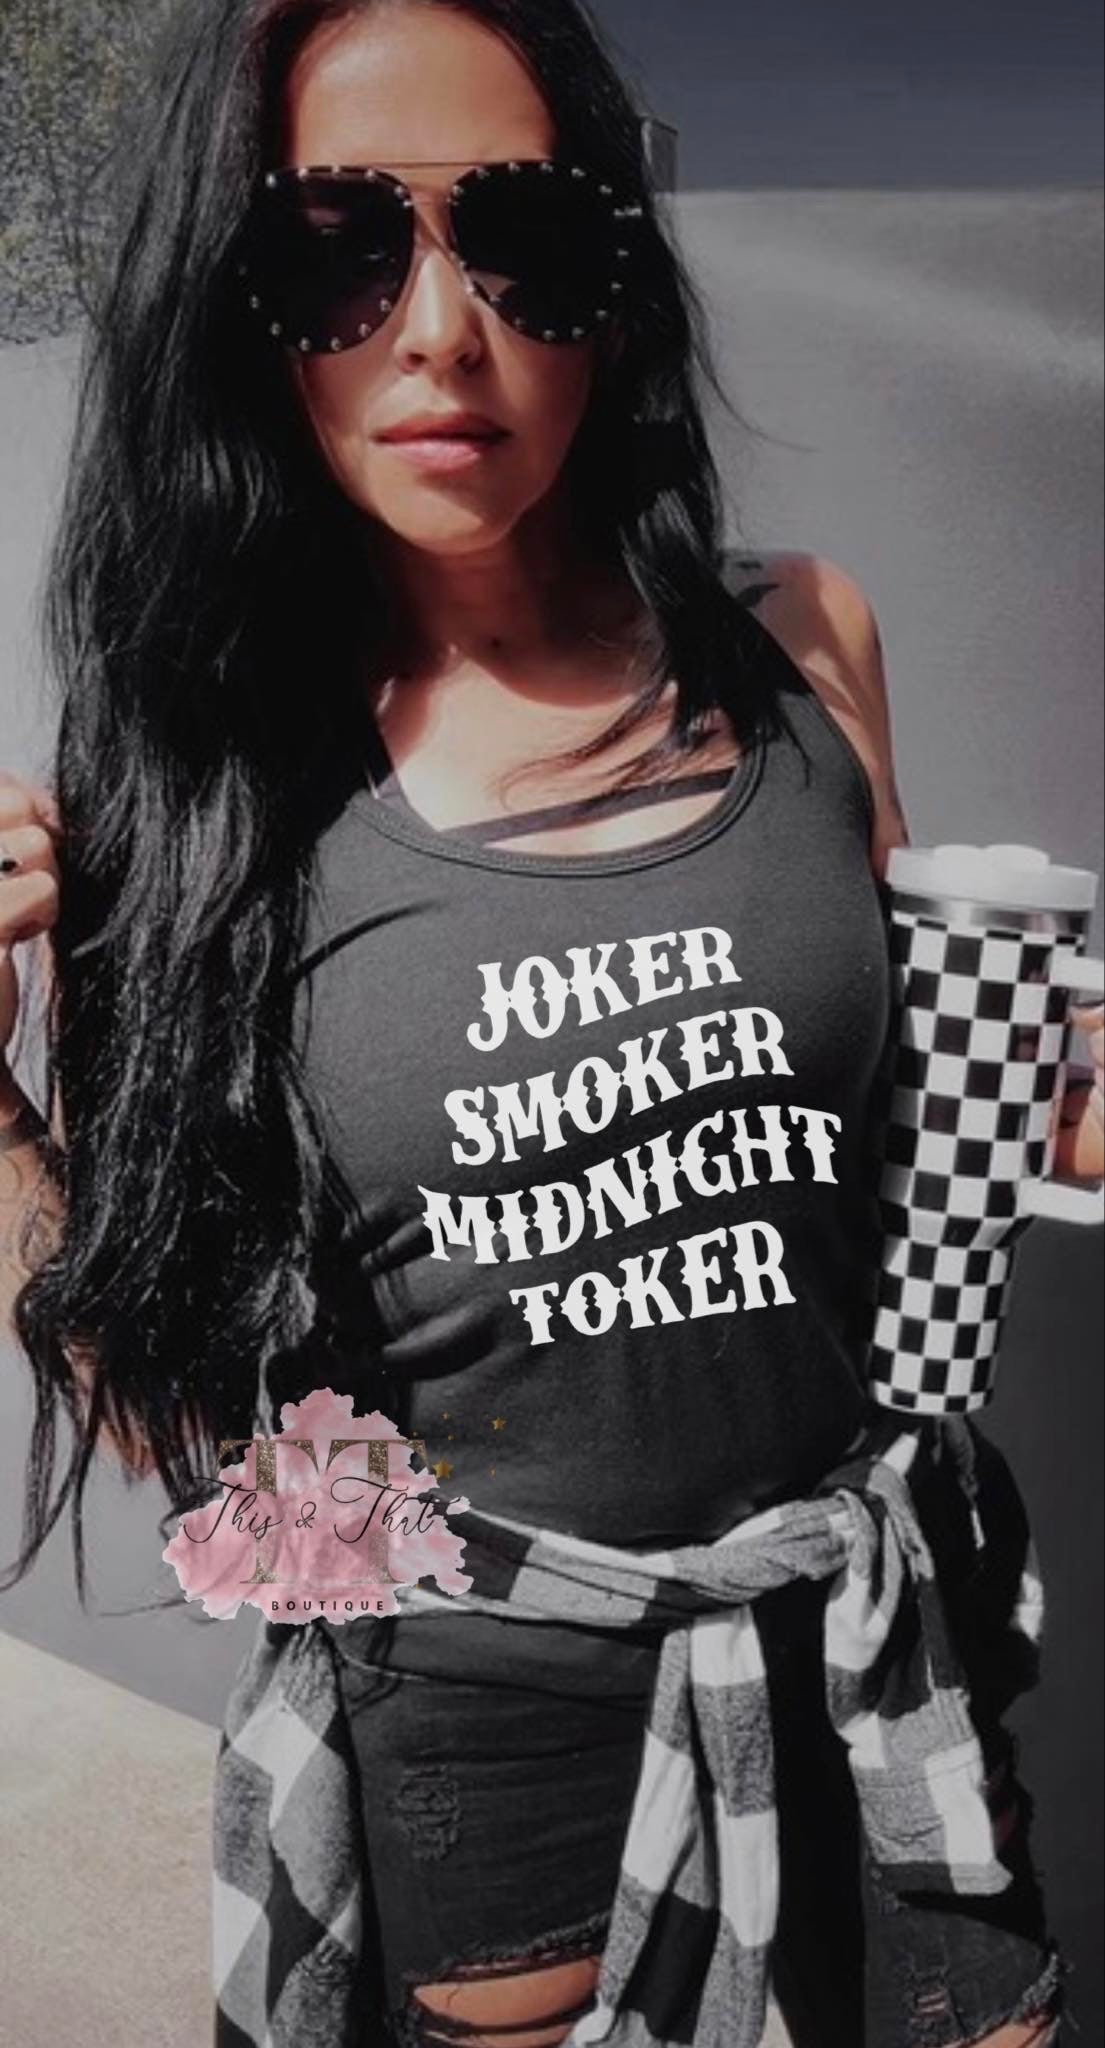 Joker Smoker Midnight Toker on Black Tank